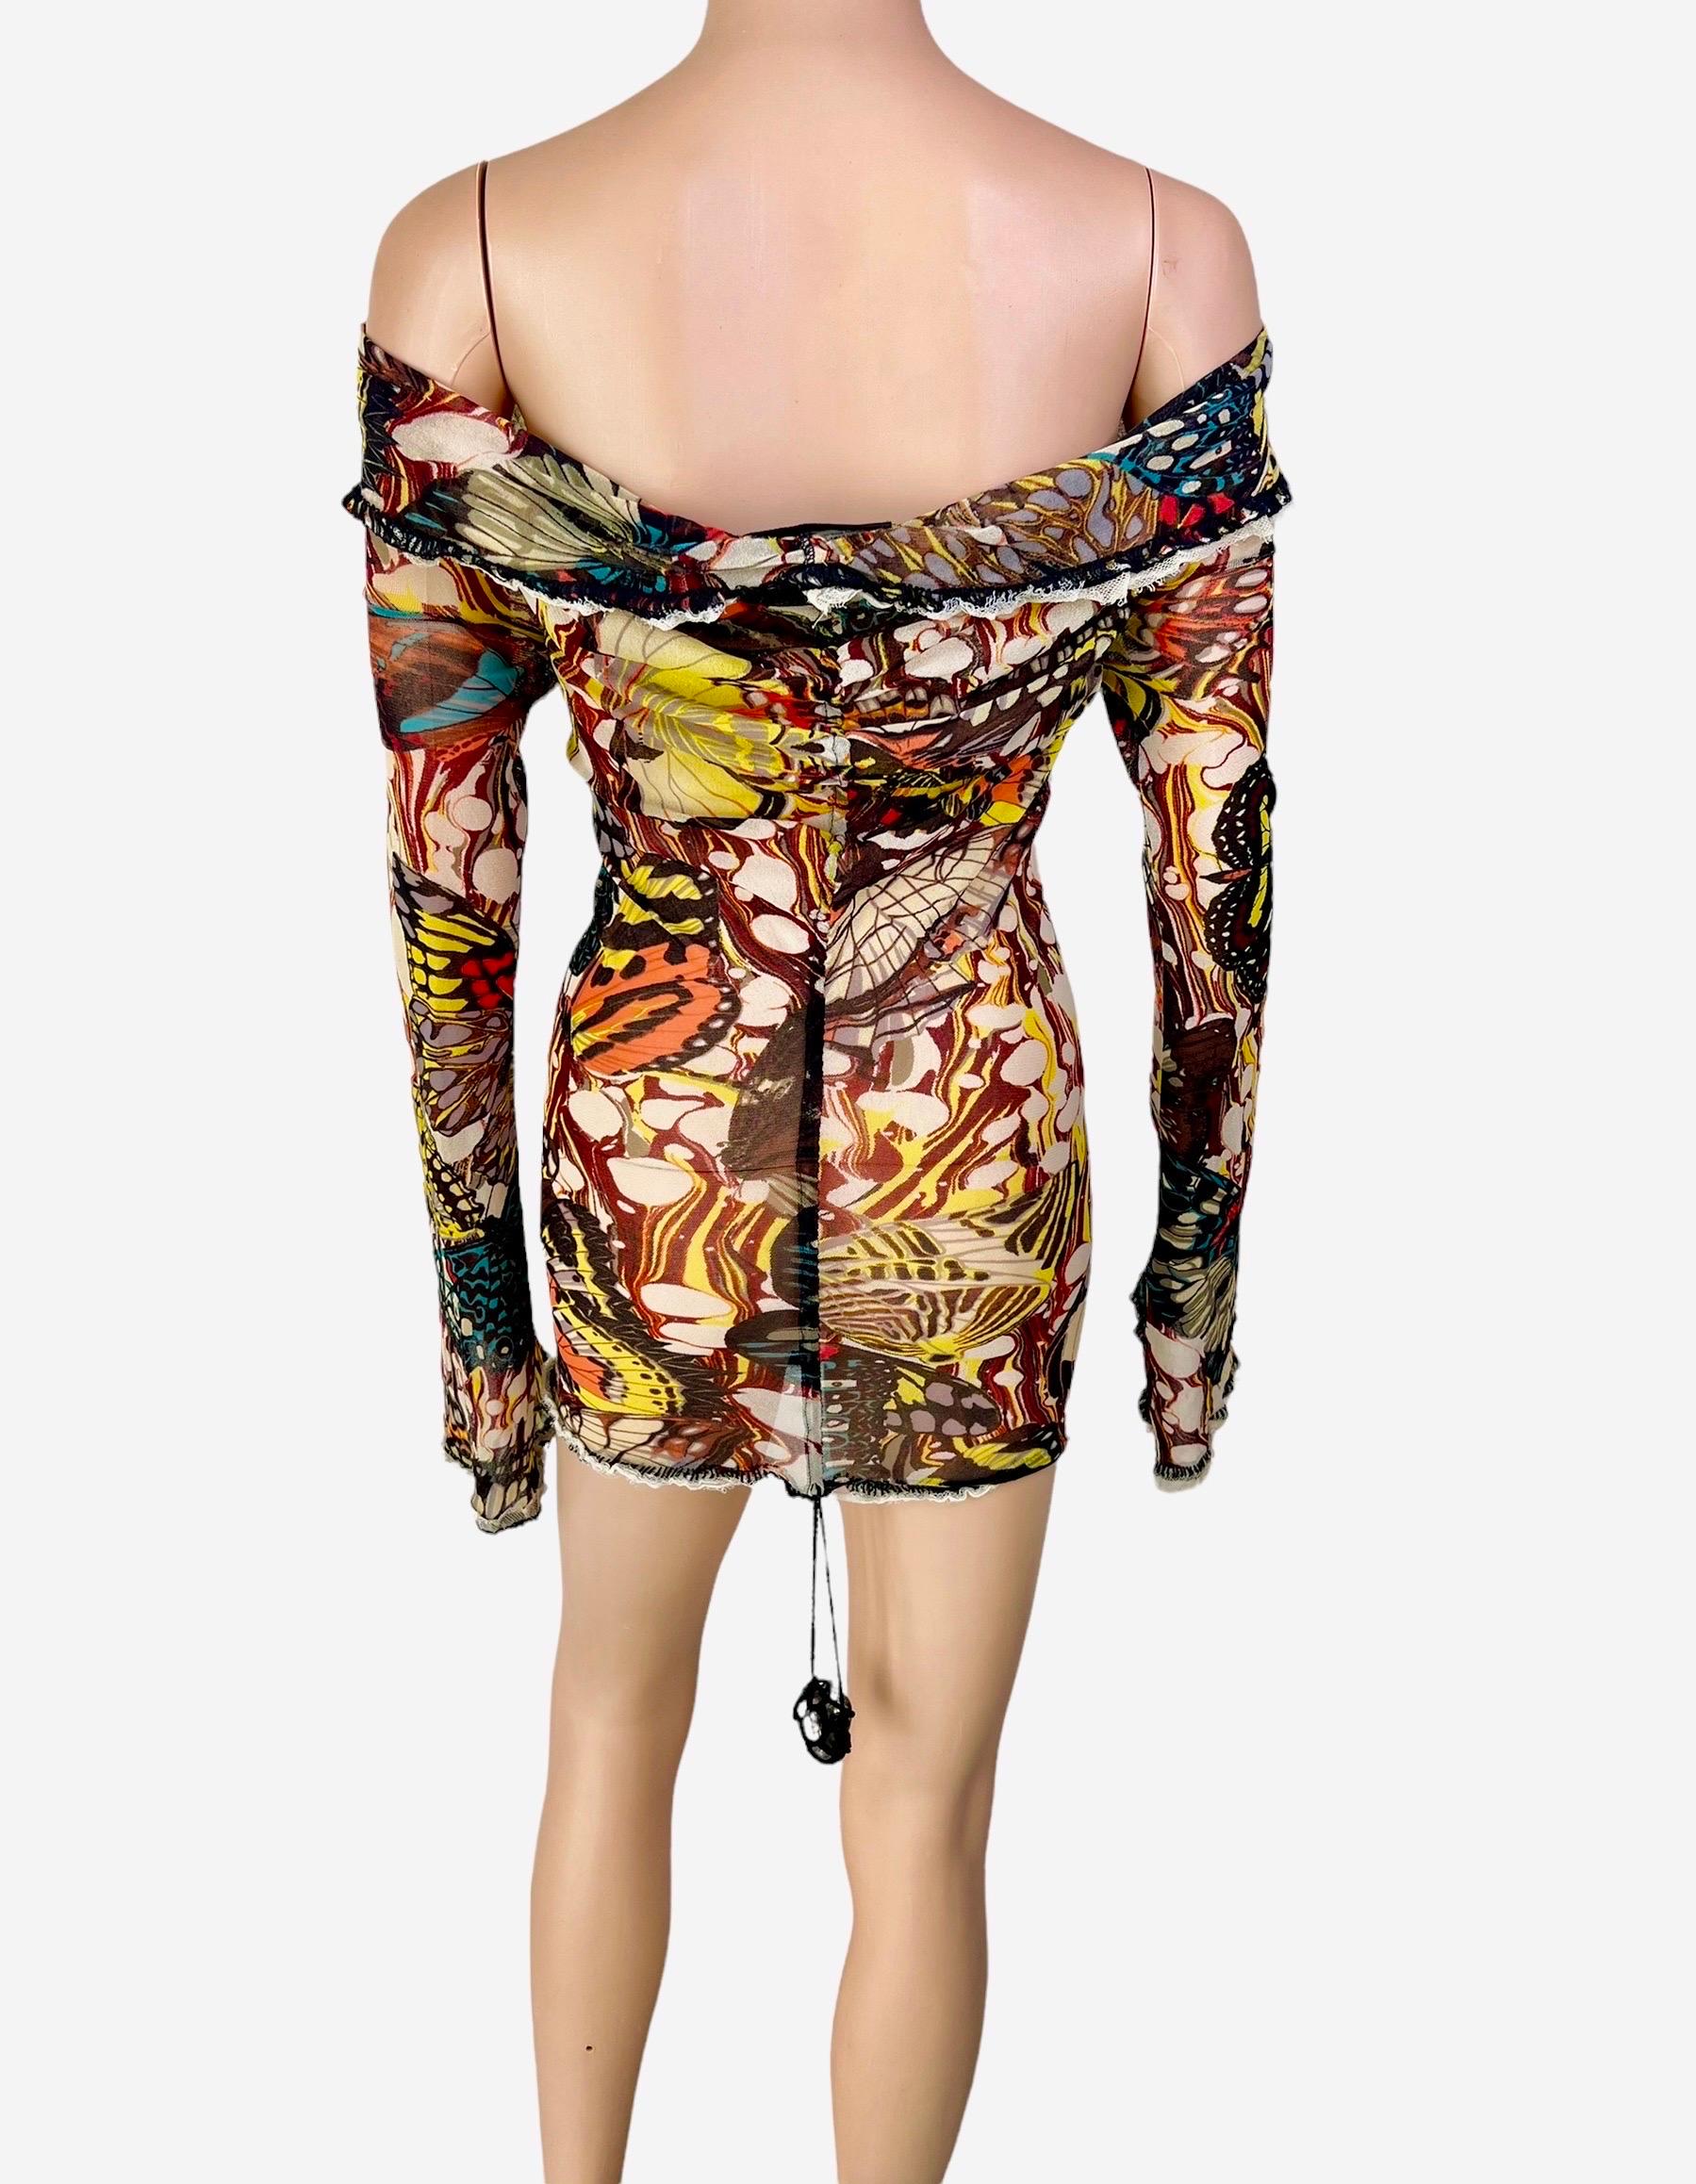 Brown Jean Paul Gaultier S/S 2003 Butterfly Sheer Mesh Off Shoulder Bodycon Mini Dress